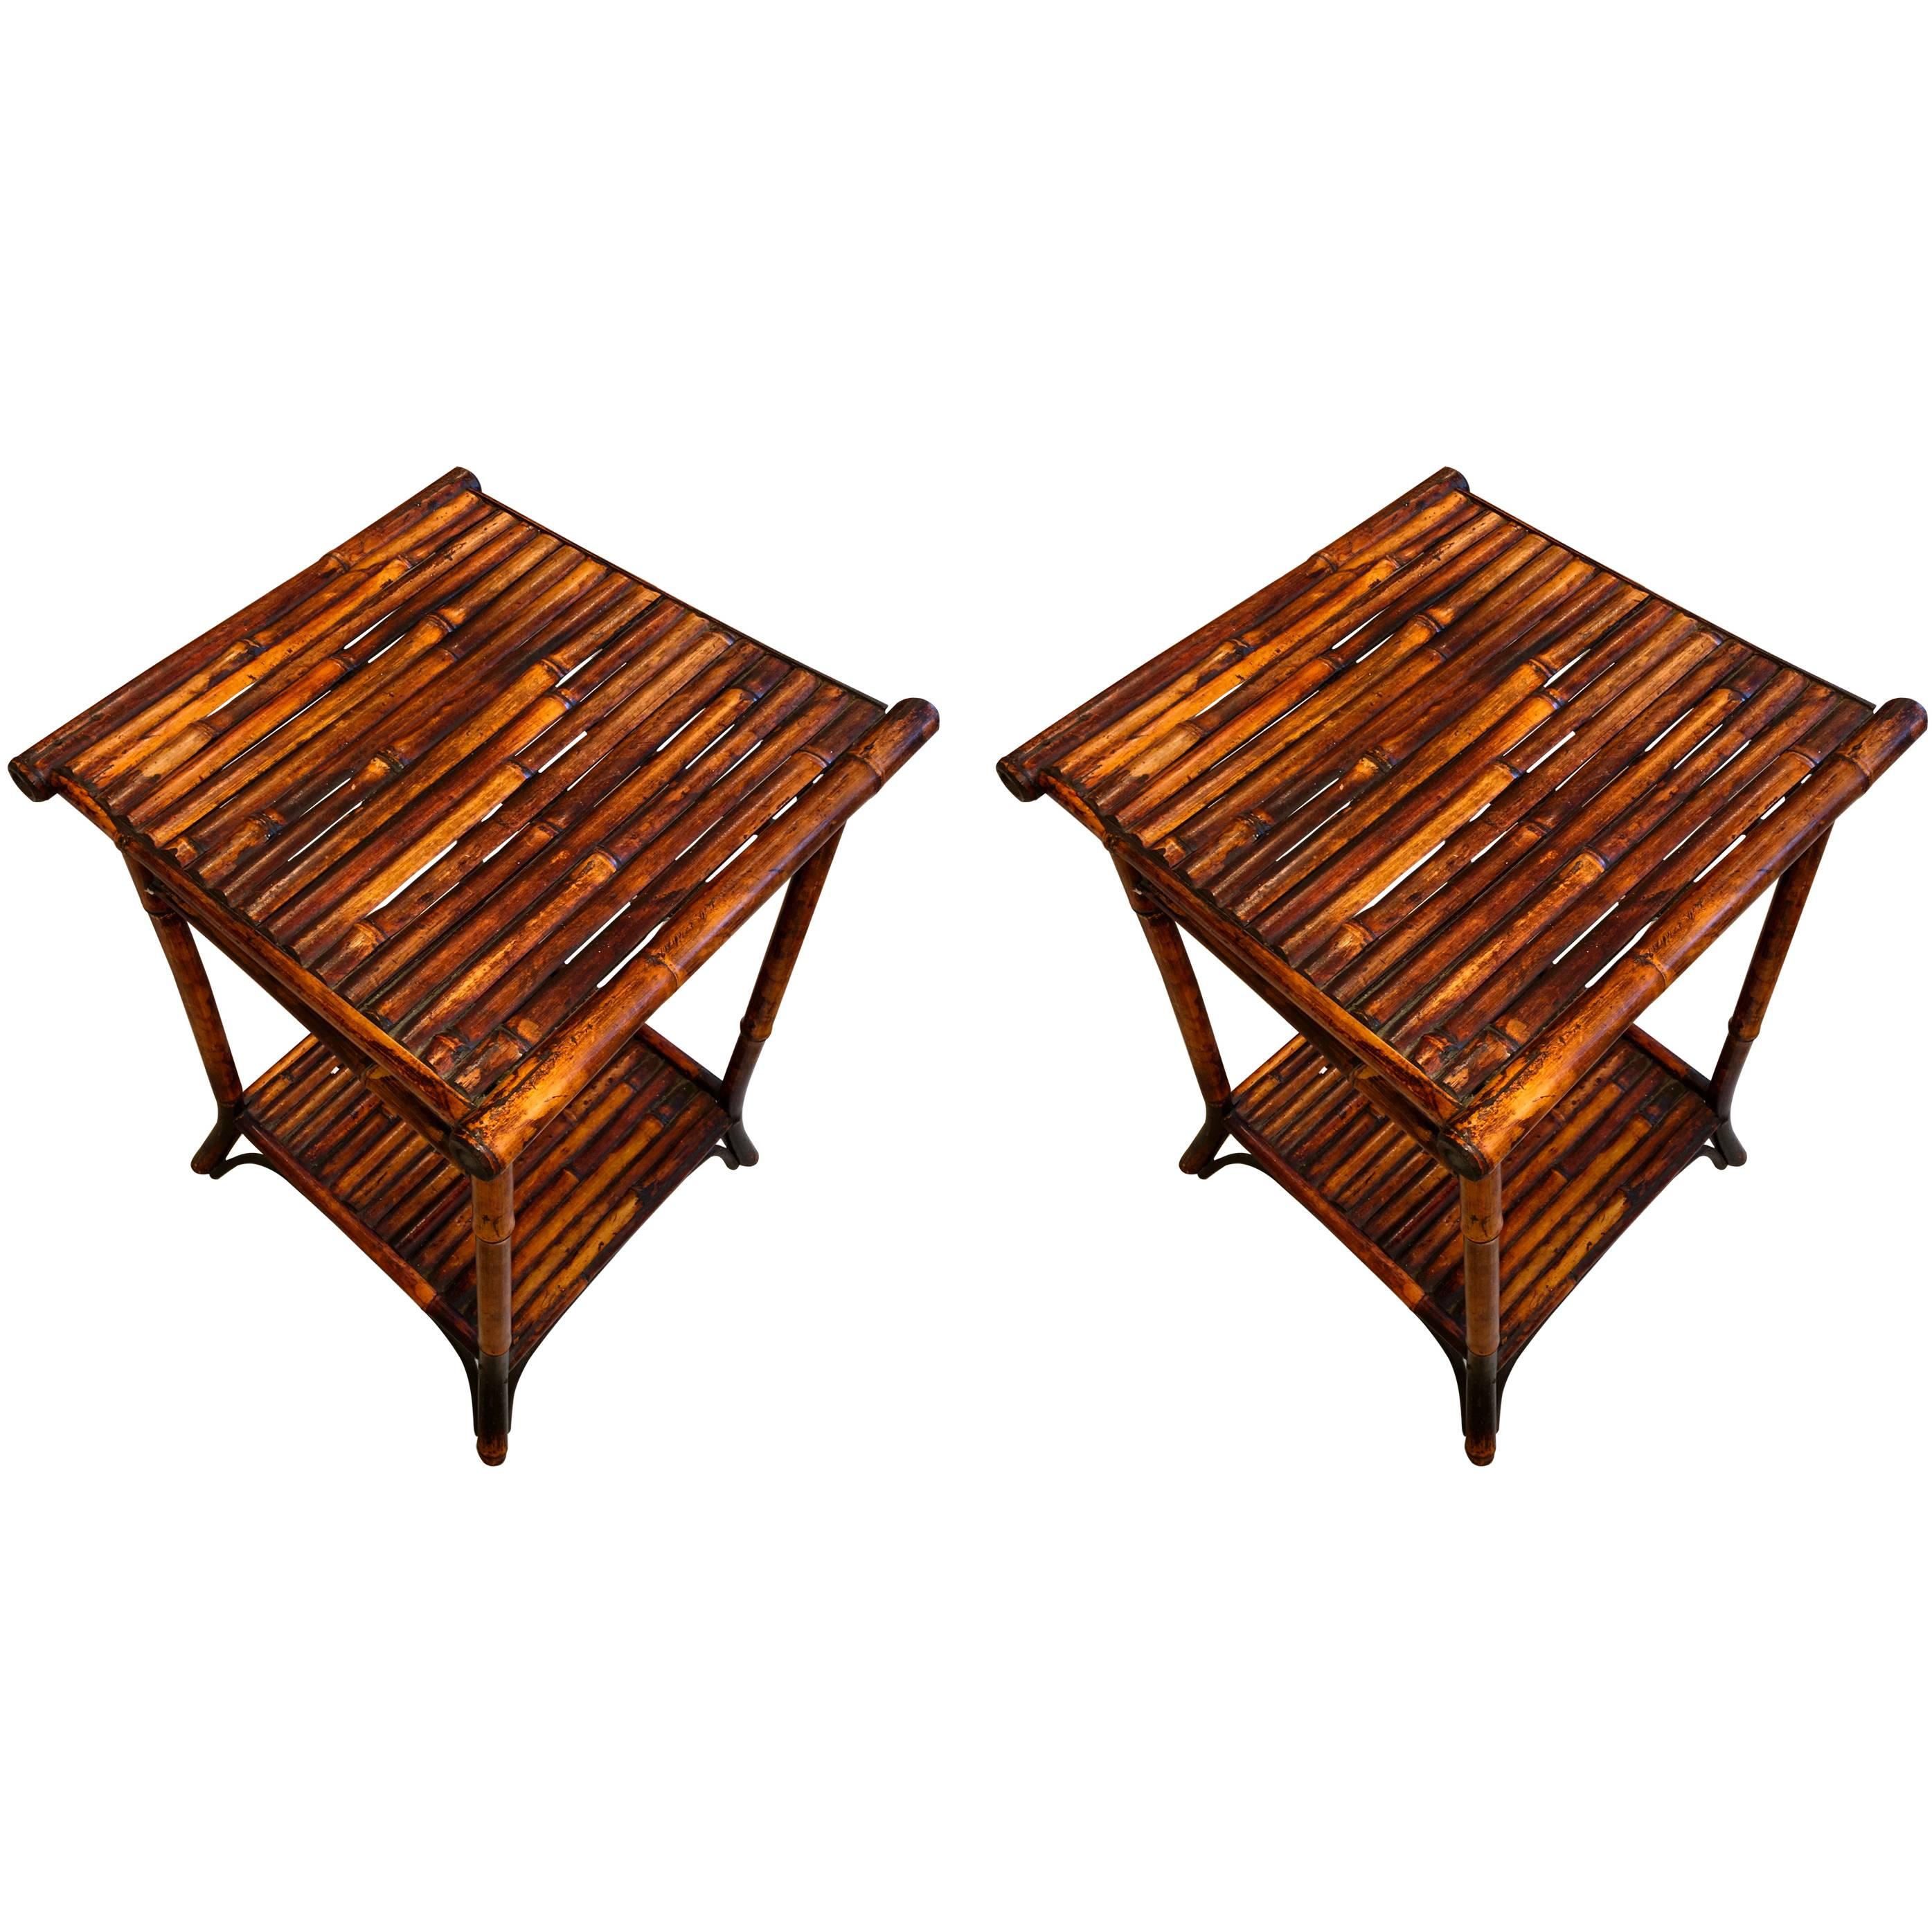 Pair of English Bamboo End Tables, circa 1920